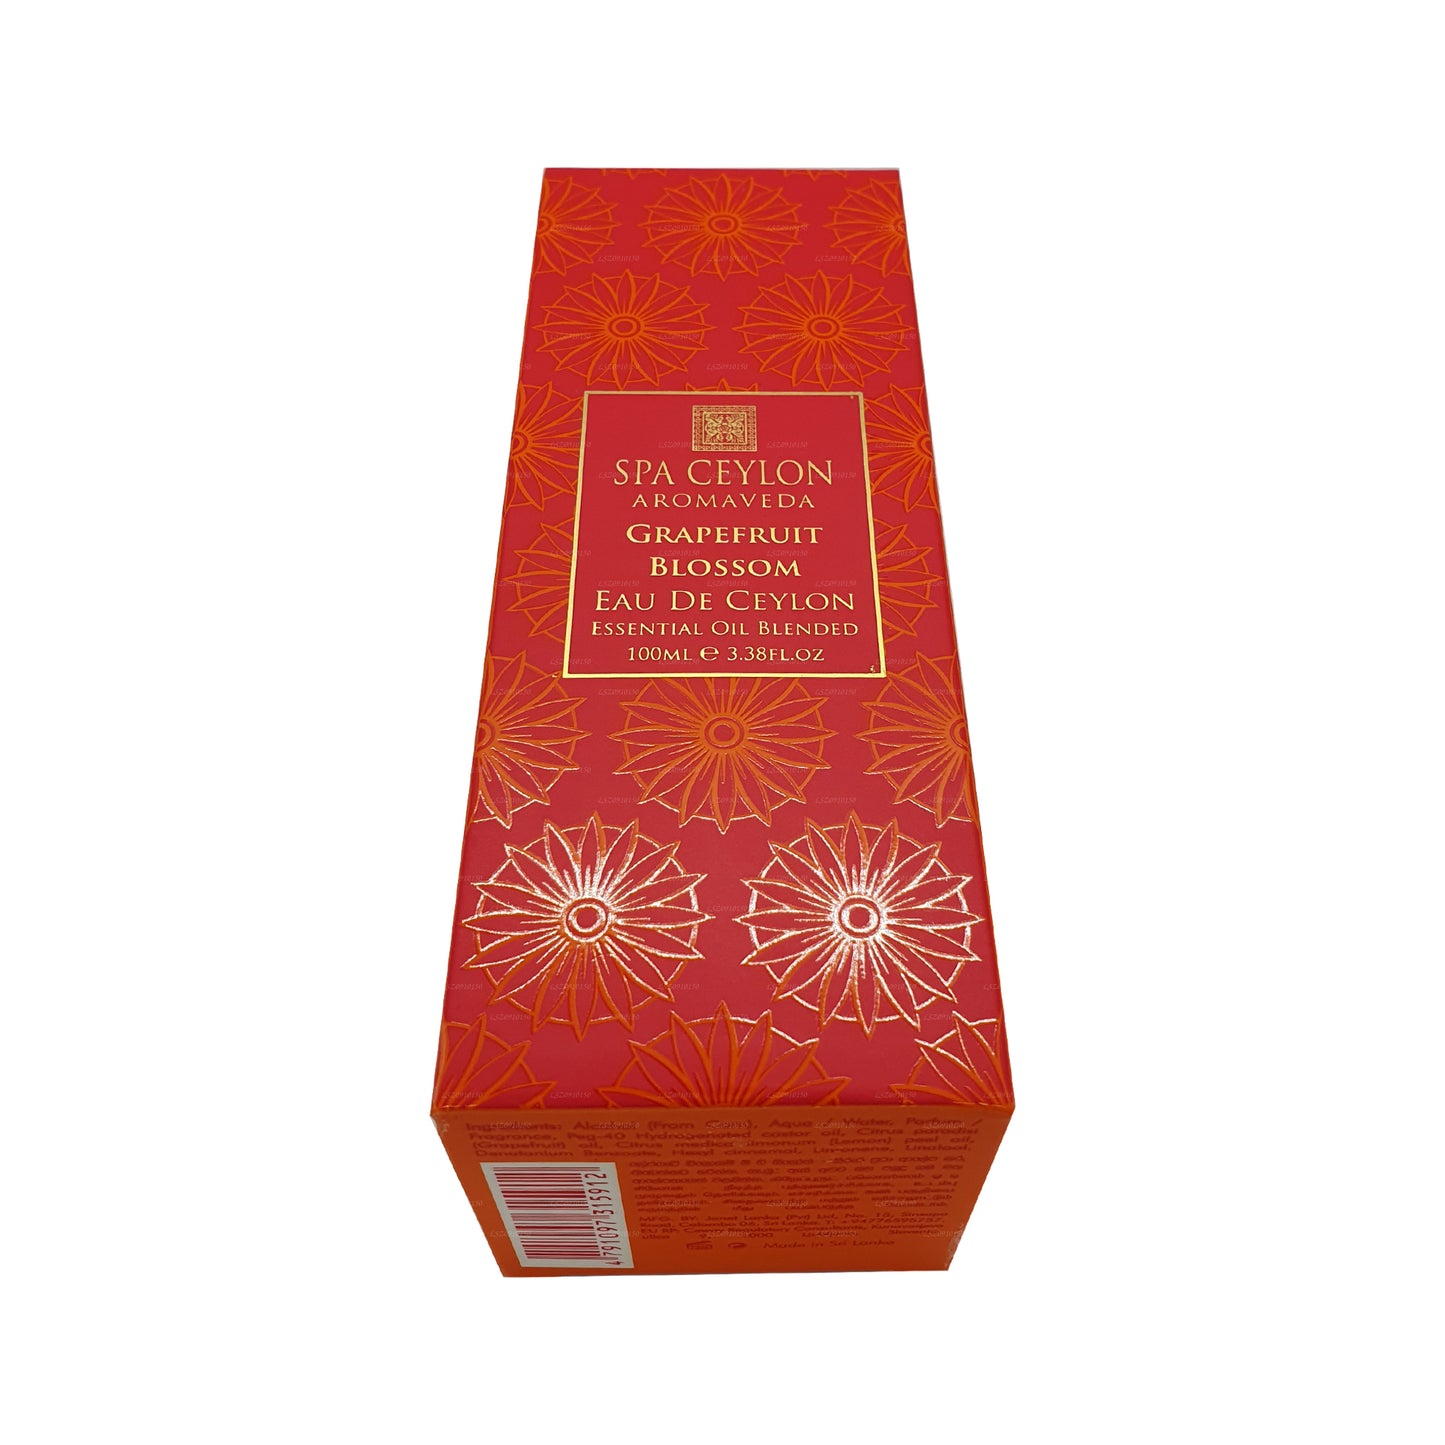 Spa Ceylon Grapefruit Blossom – Eau De Ceylon (100 ml)